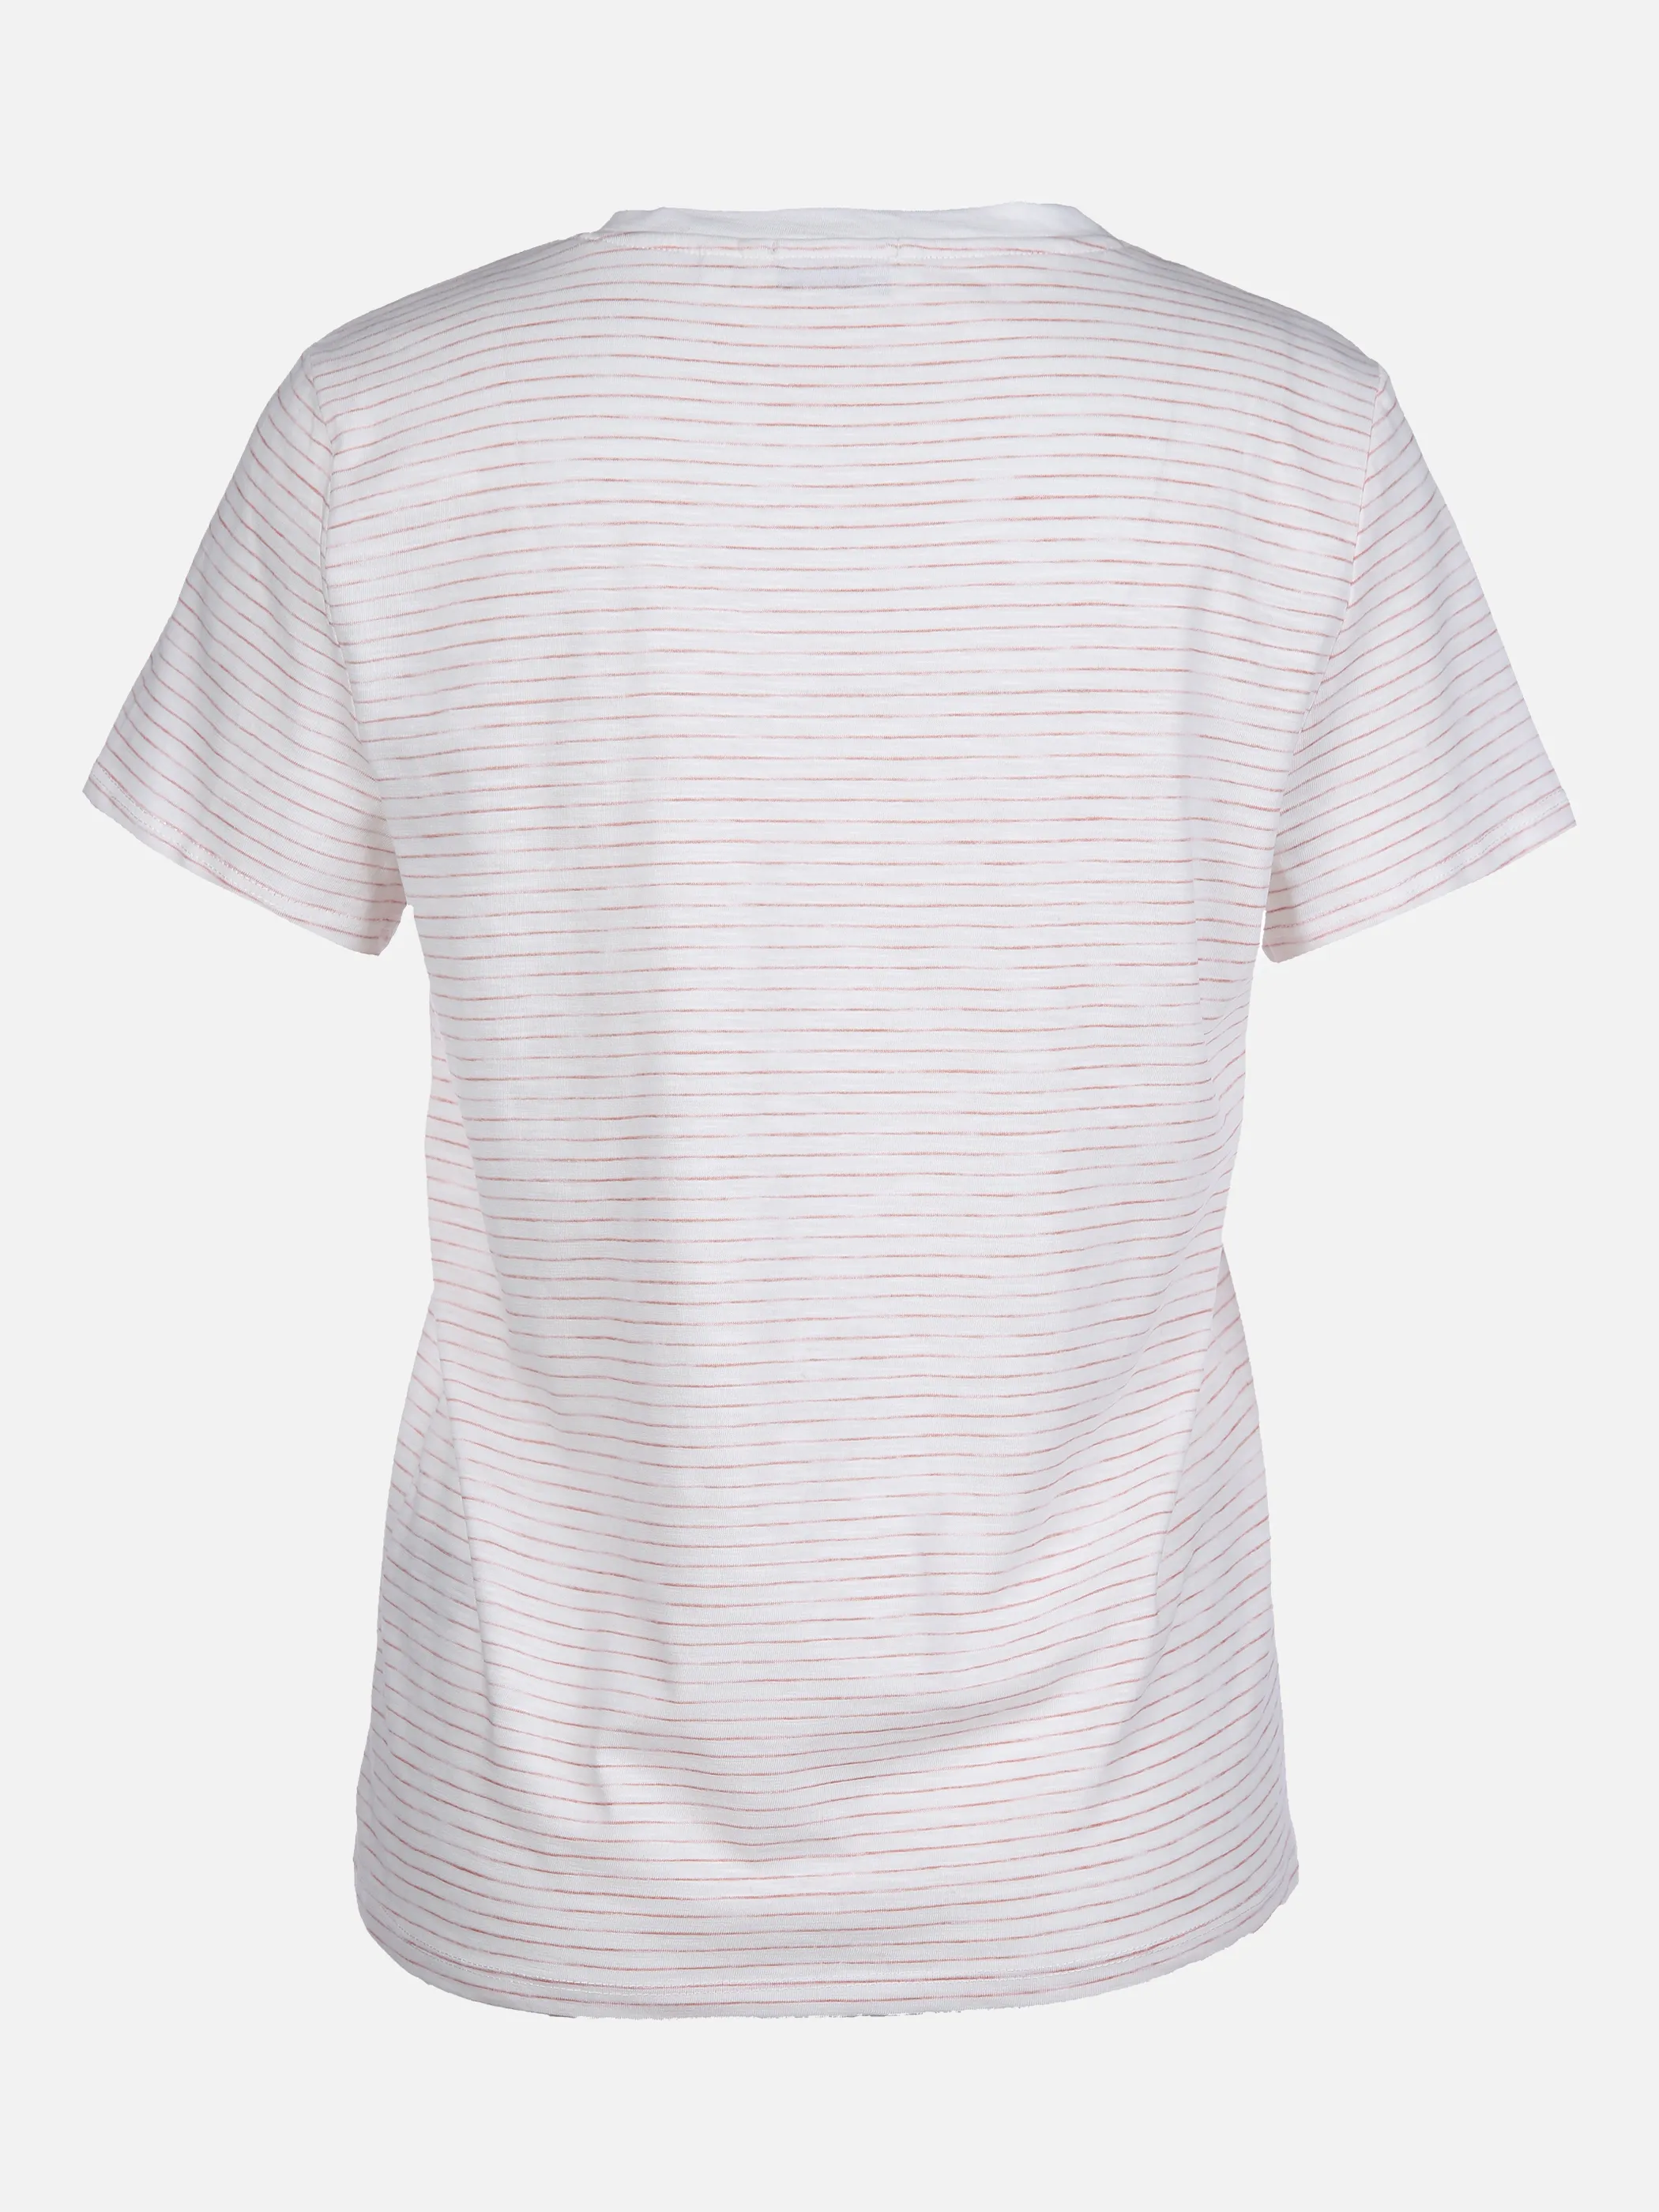 Tom Tailor 1031195 T-shirt inside stripe Weiß 865210 29545 2